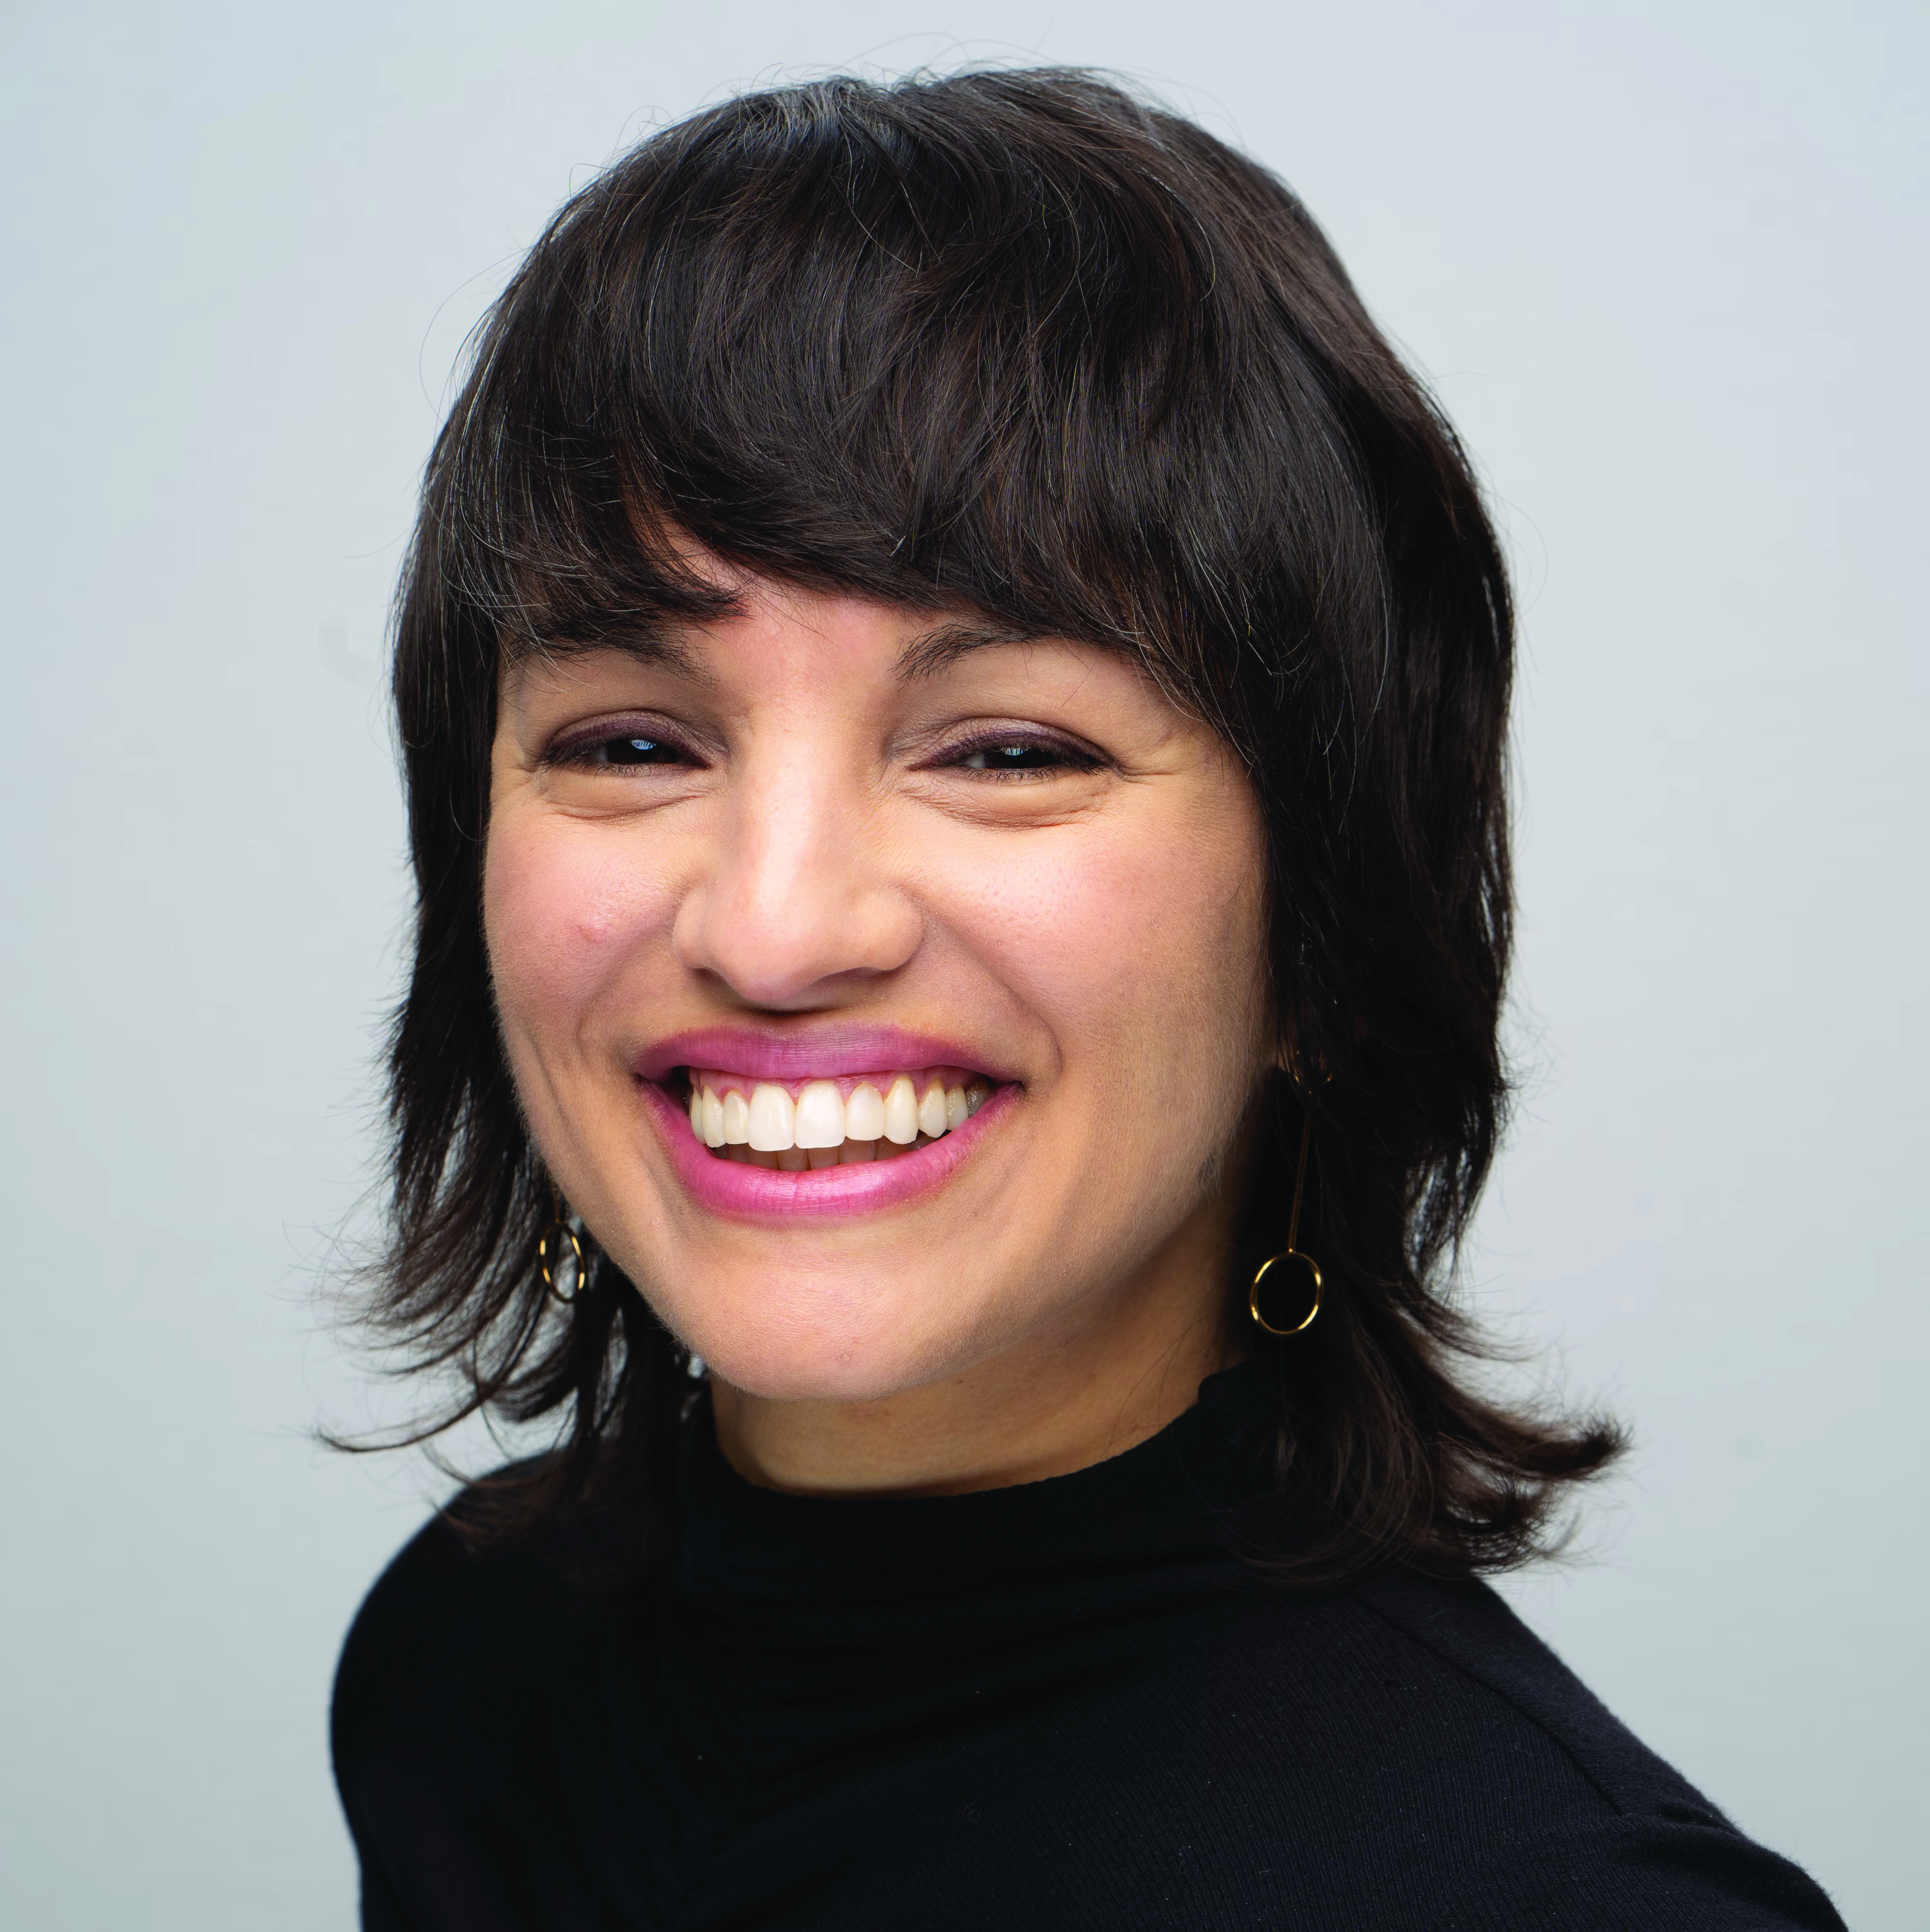 Mónica Guzmán smiling in professional headshot